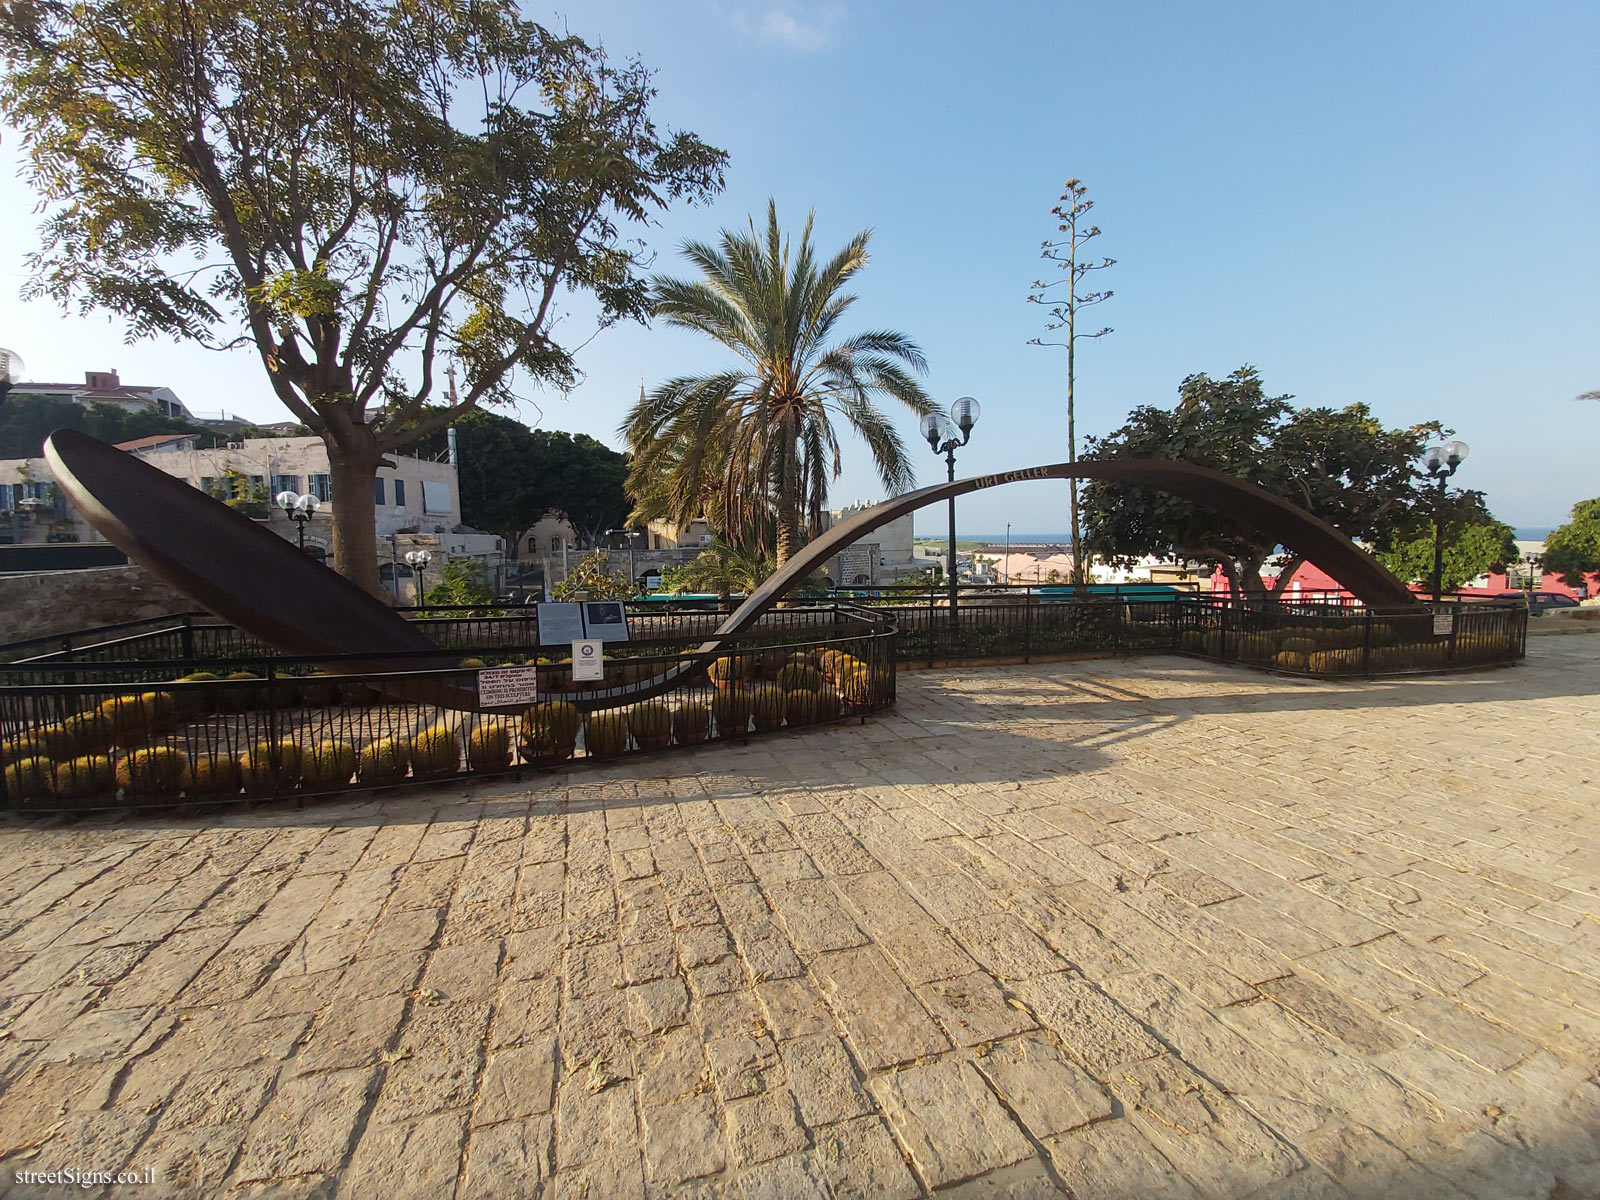 Old Jaffa - Guinness record - the largest spoon in the world - Mazal Dagim St 8, Tel Aviv-Yafo, Israel